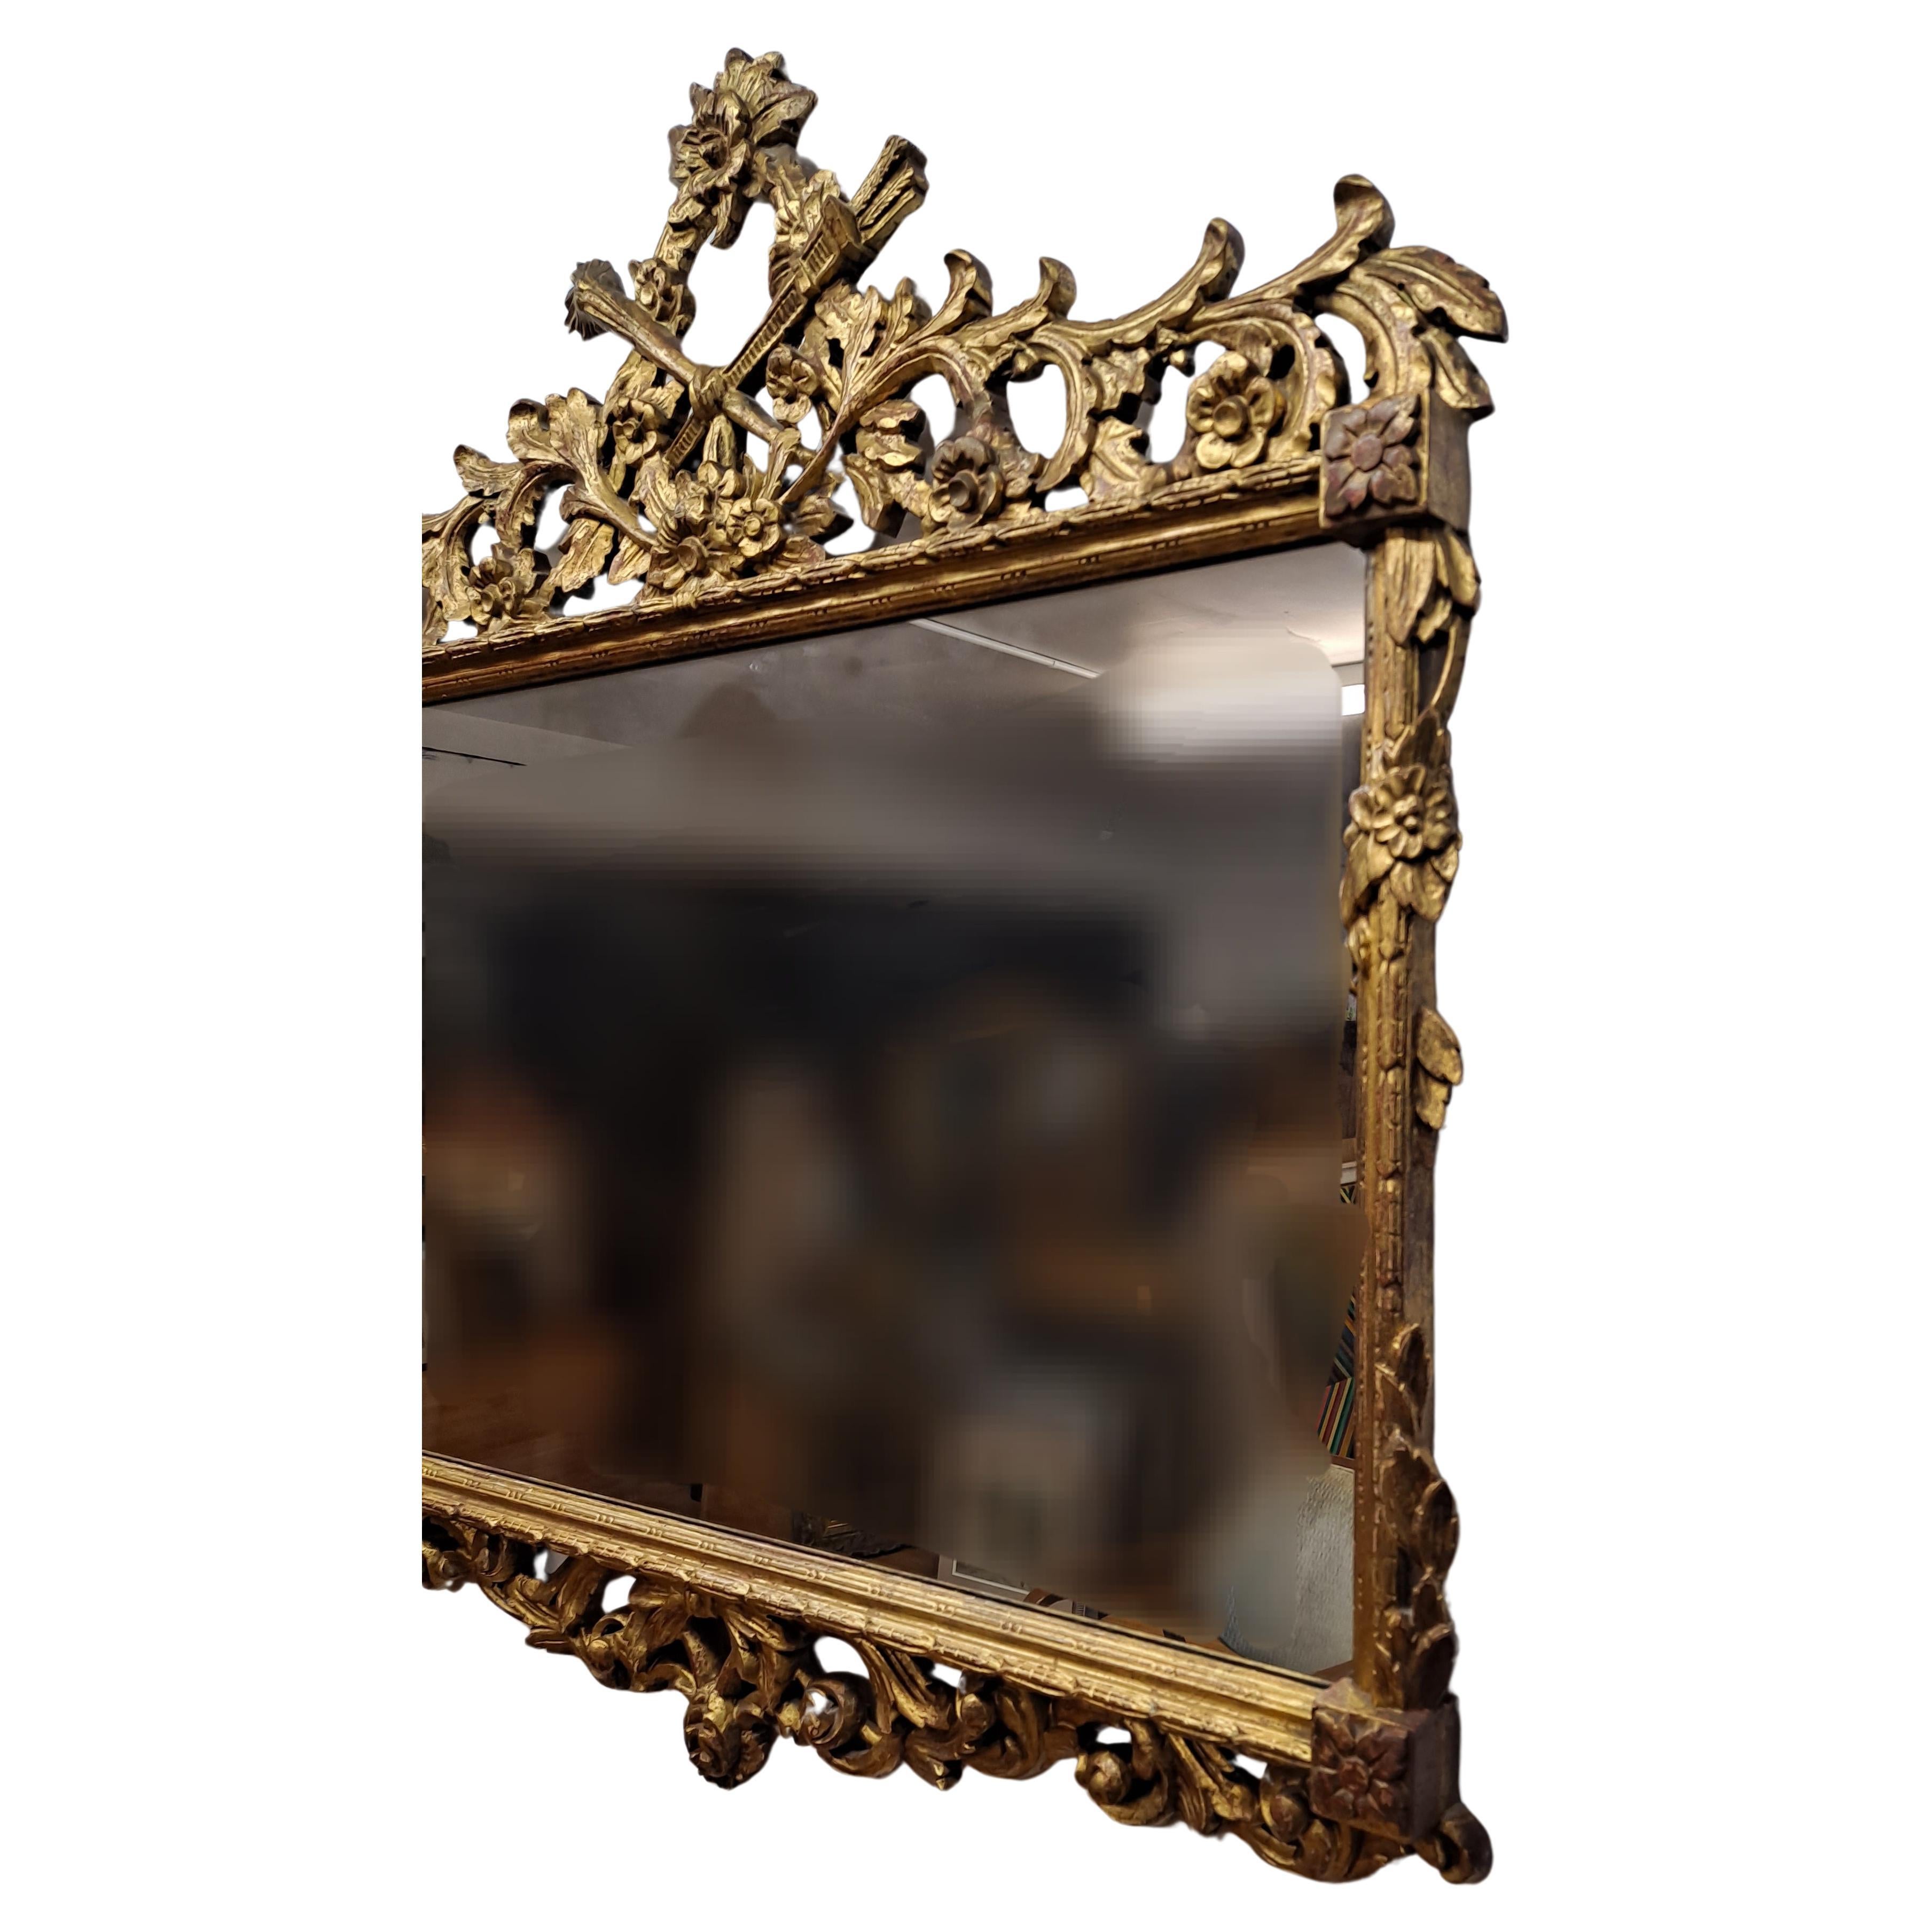 Spektakuläre viktorianischen Barock-Stil floral geschnitzt Vergoldung Spiegel

Spiegel: 23